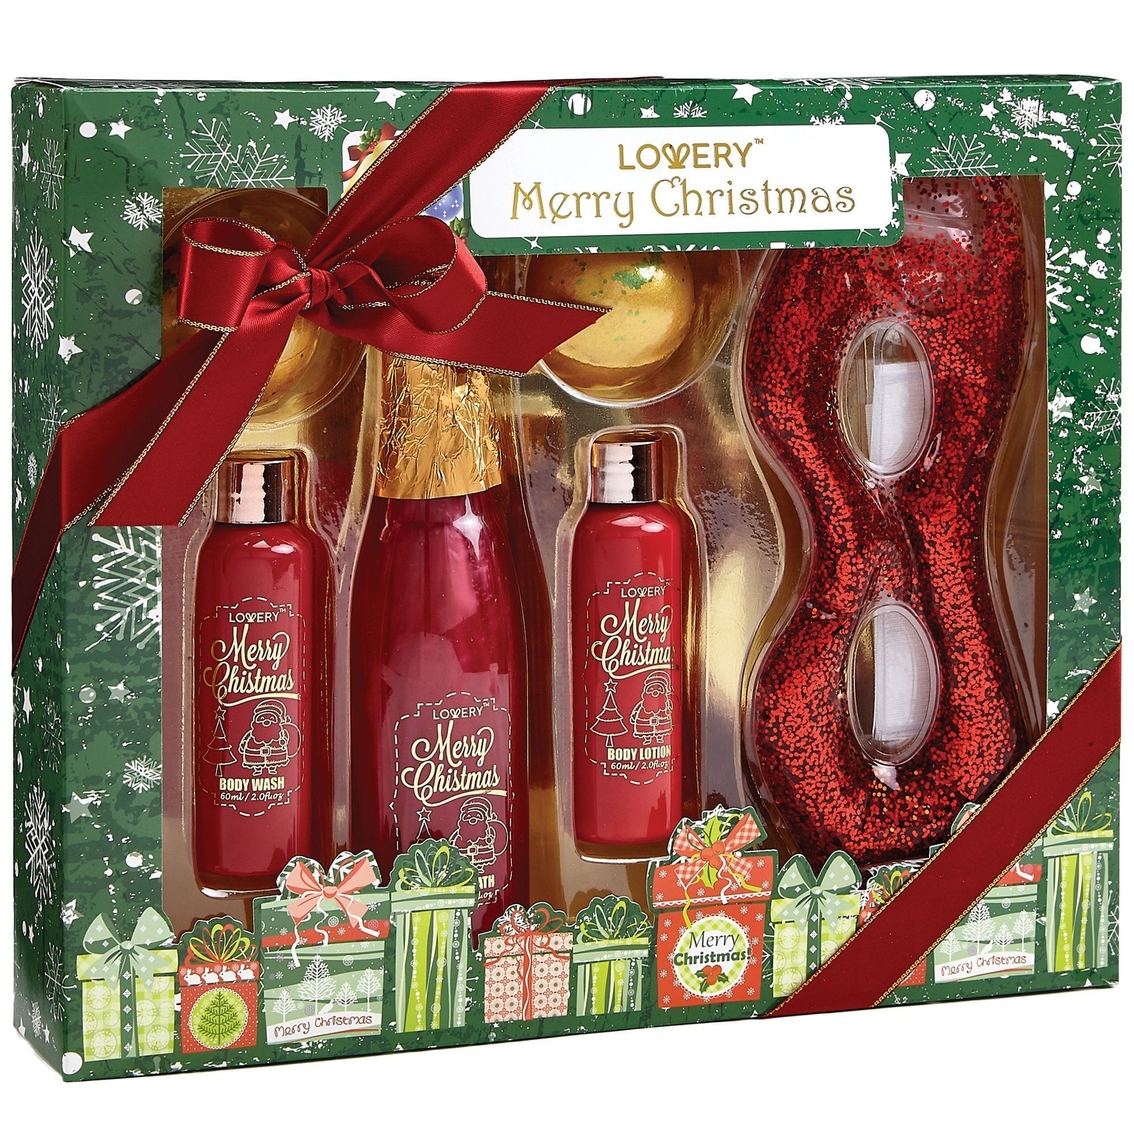 Lovery Bath & Body Christmas Gift Box - Red Rose & Jasmine Home Spa Set - Image 1 of 5